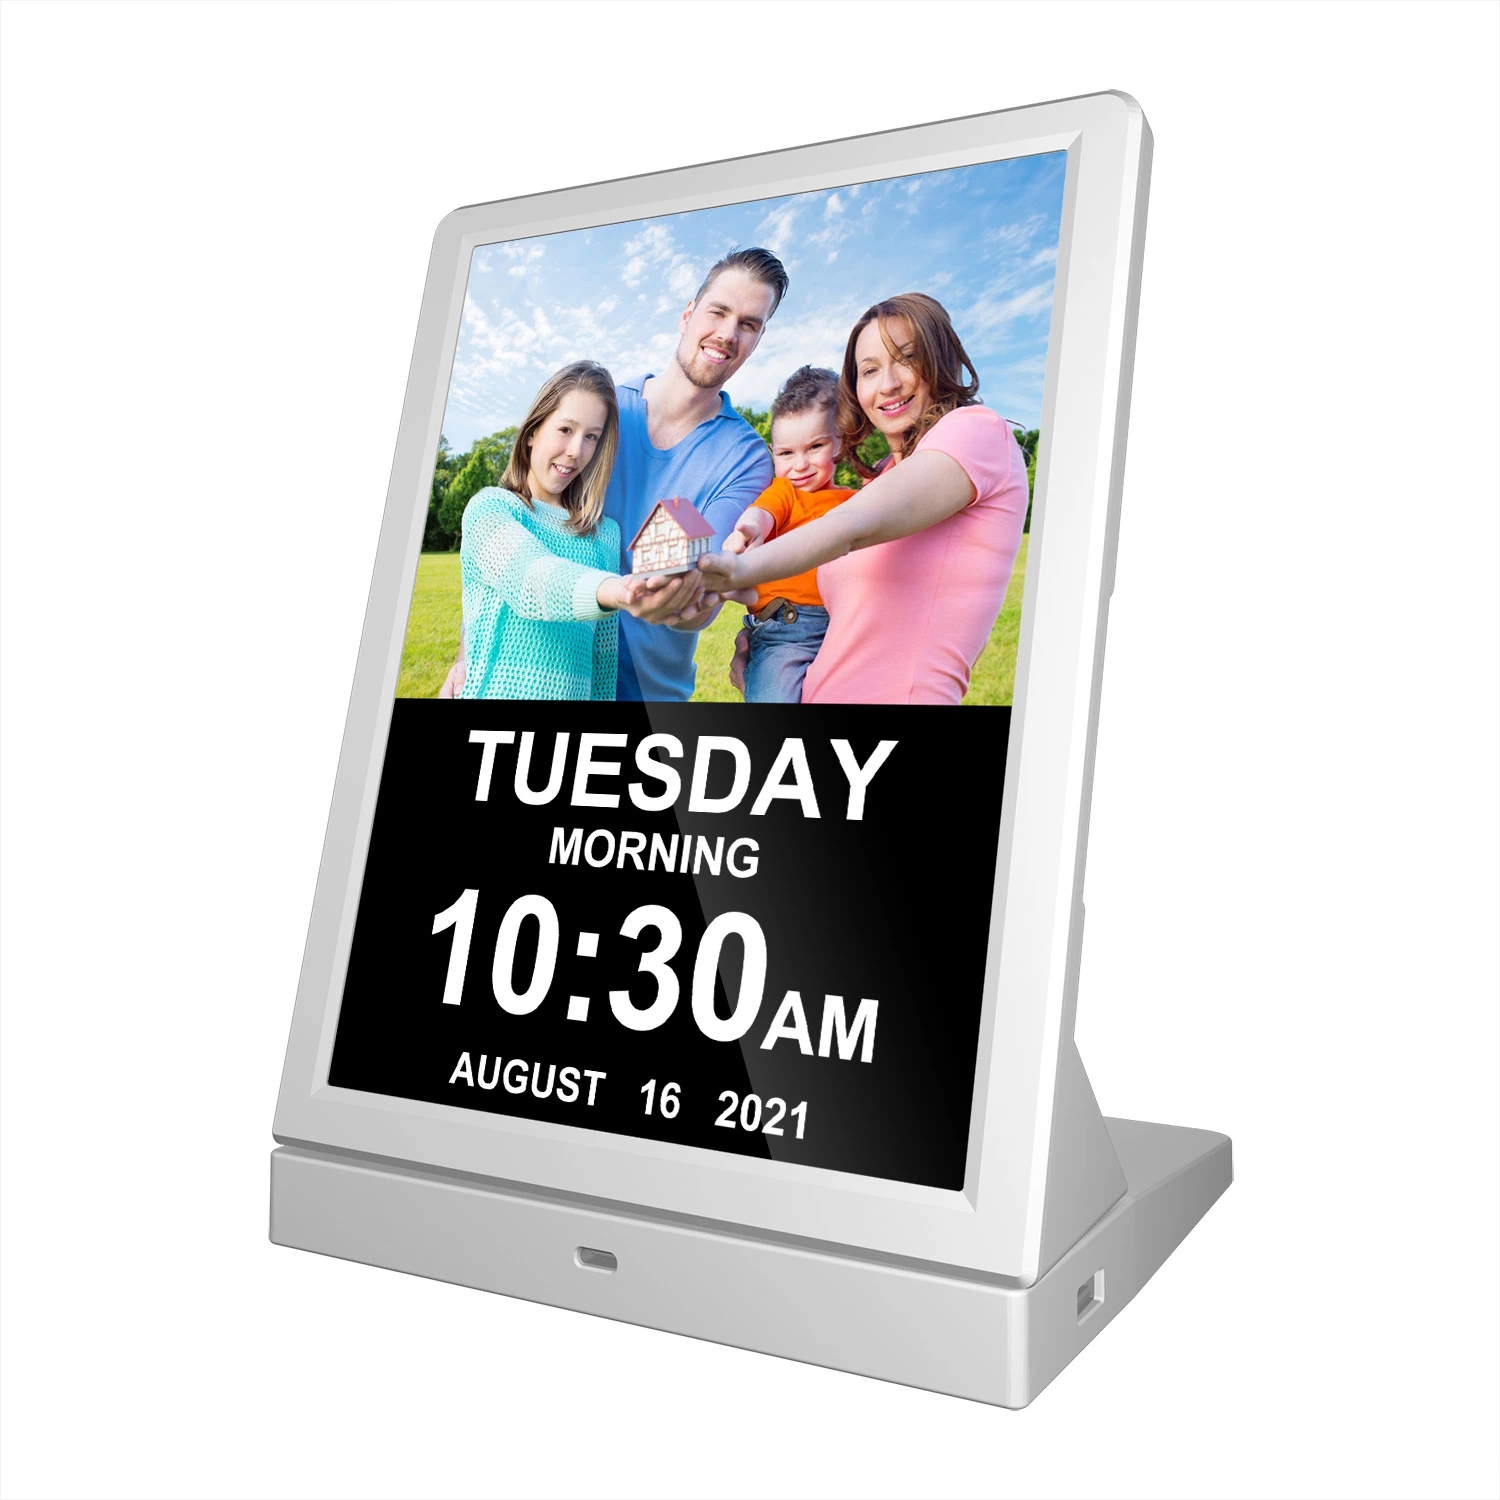 Ads Managing System Cloud Server LCD Display 9.7 Inch Digital Photo Frame